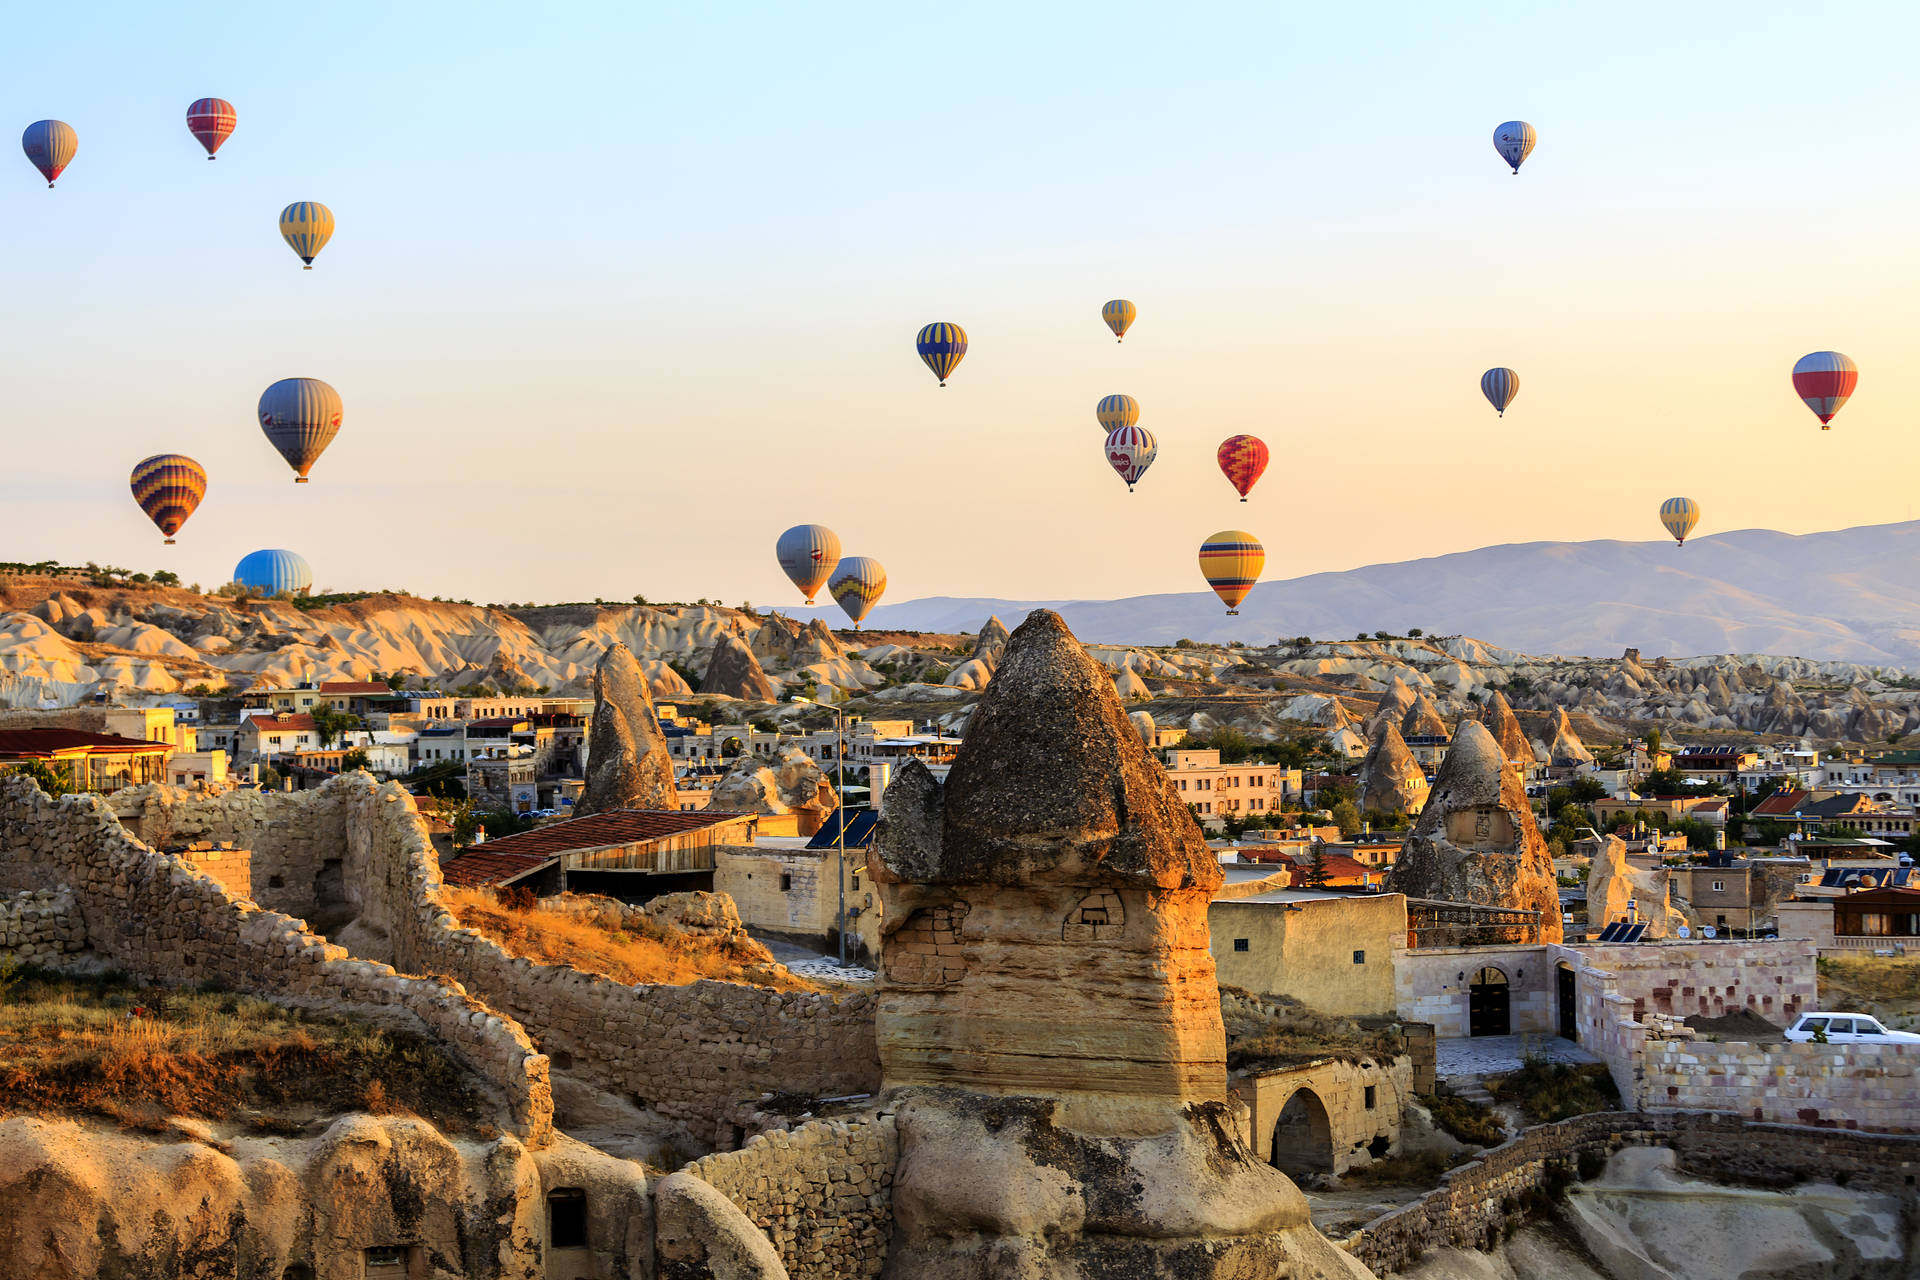 Cappadociasballons Fliegen Über Das Dorf Wallpaper